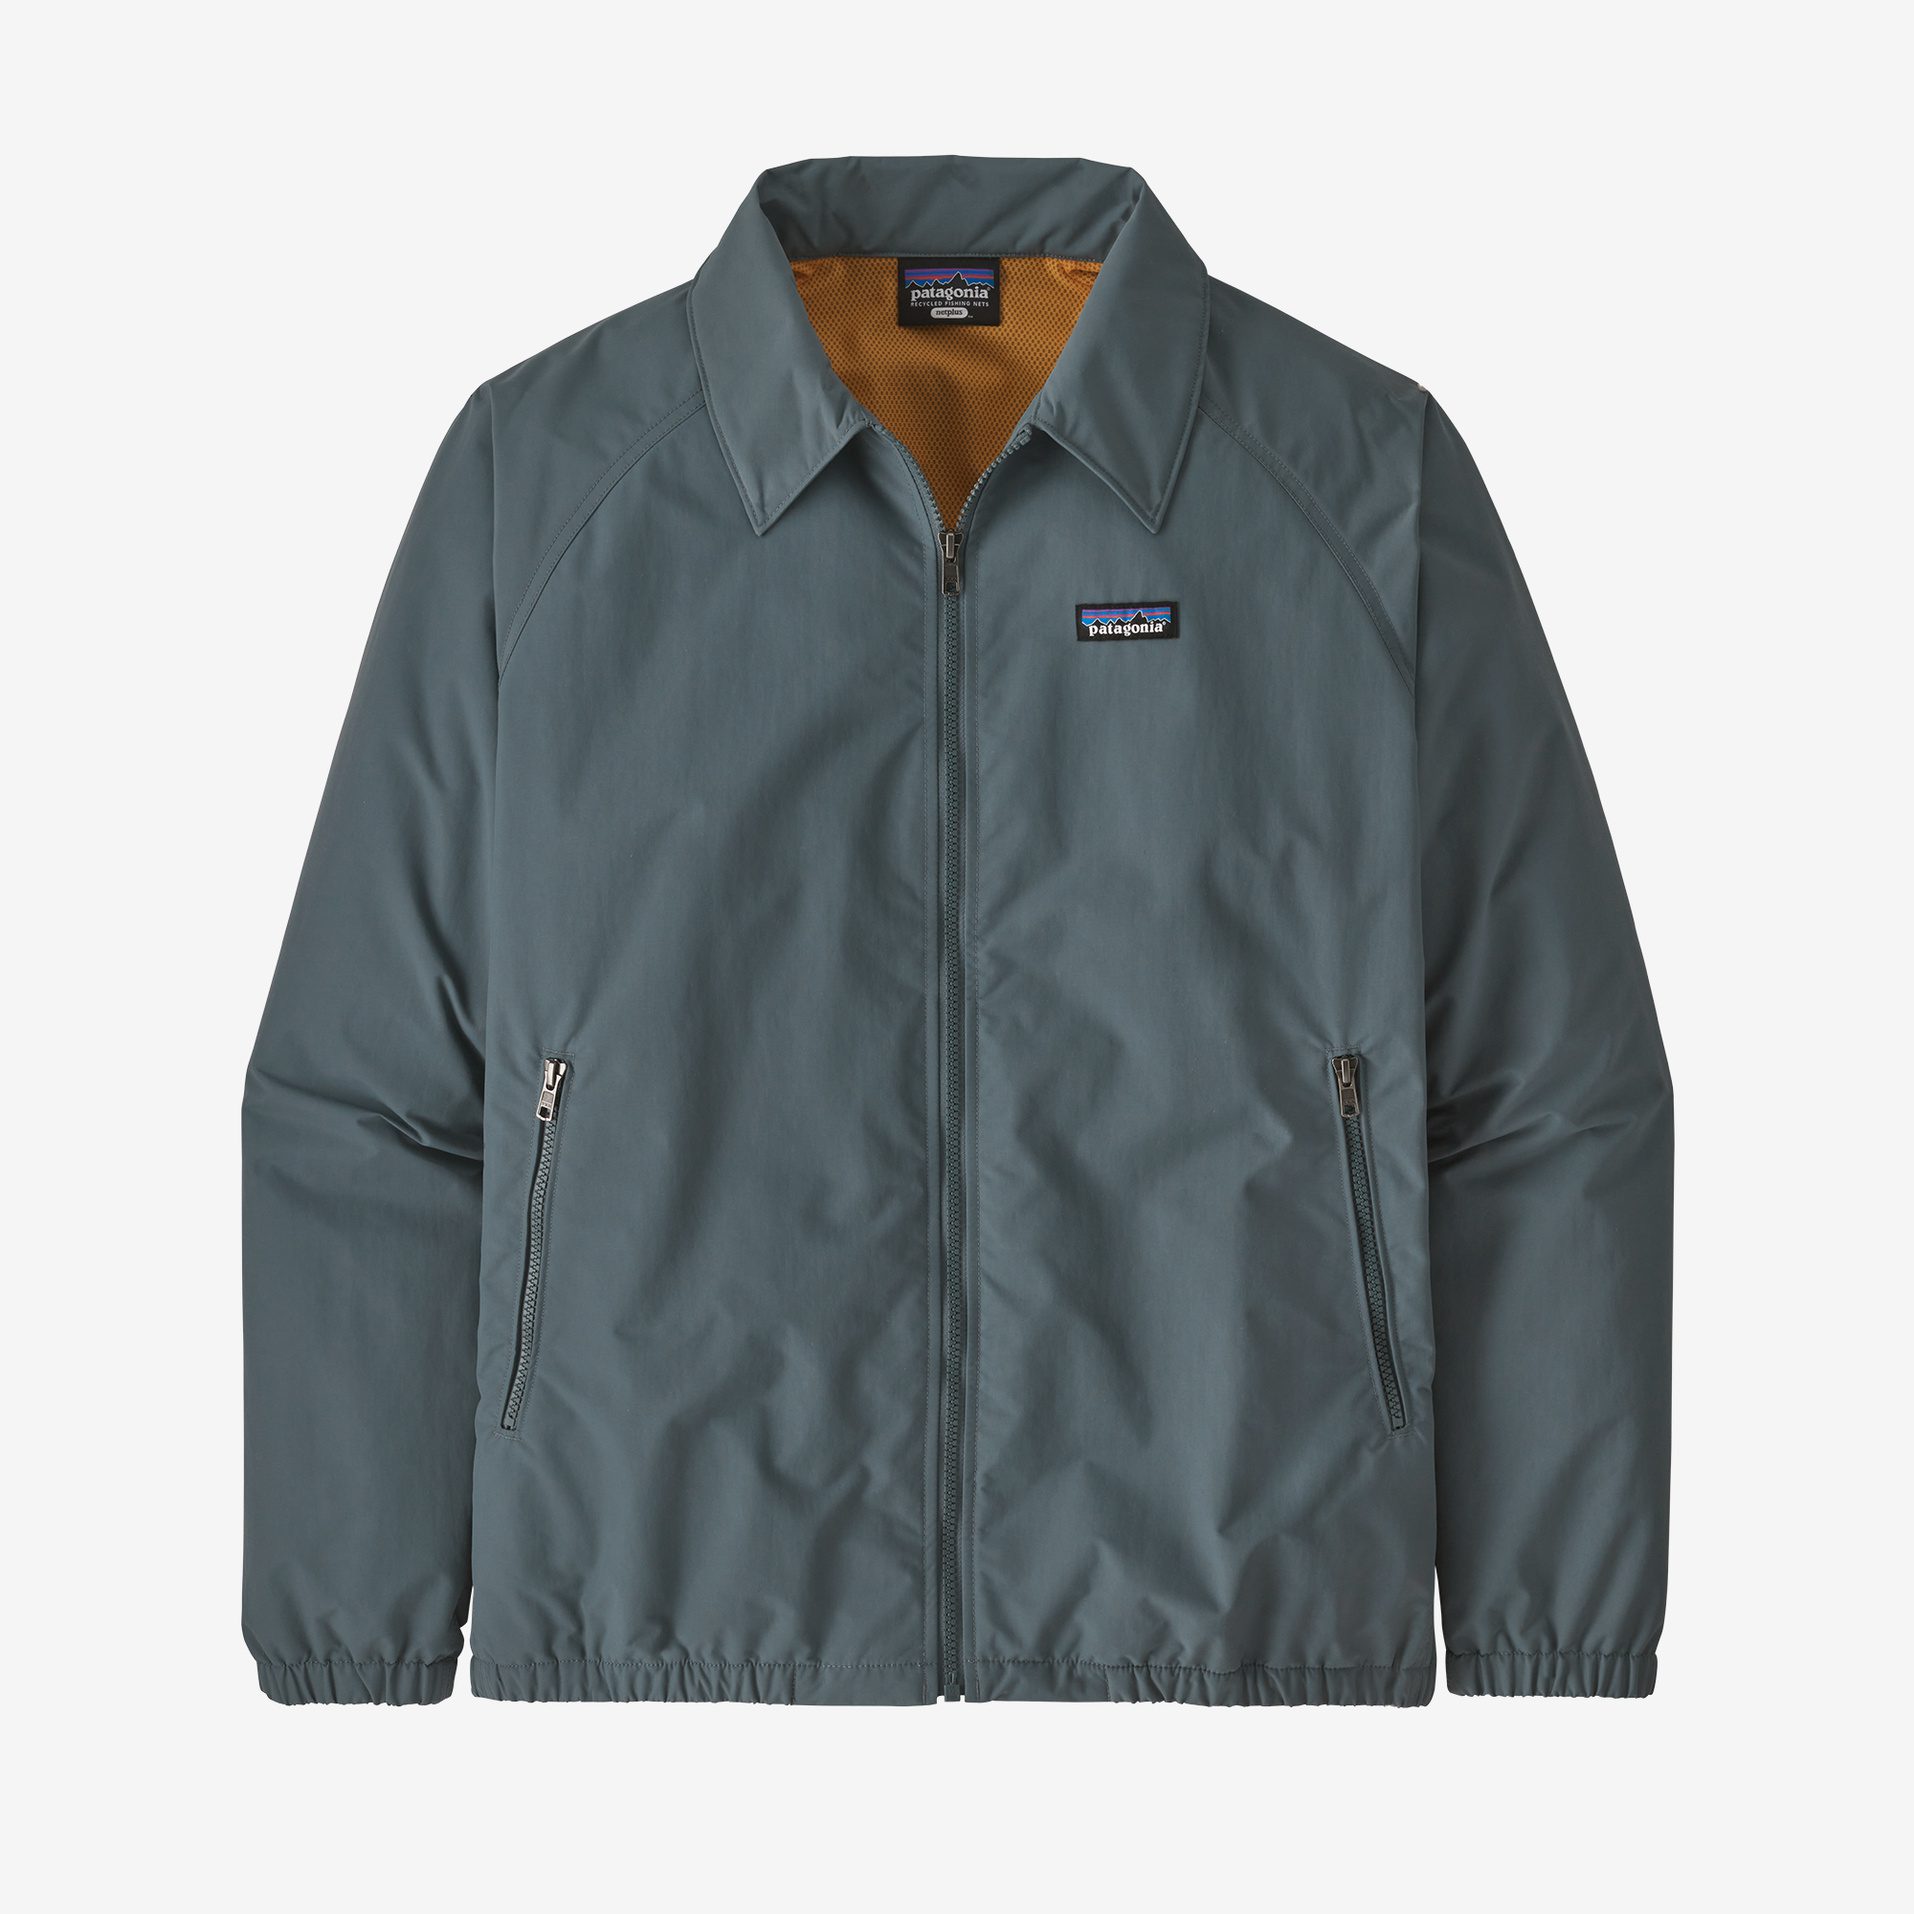 Patagonia Men's Baggies Jacket #28152 Plume Grey